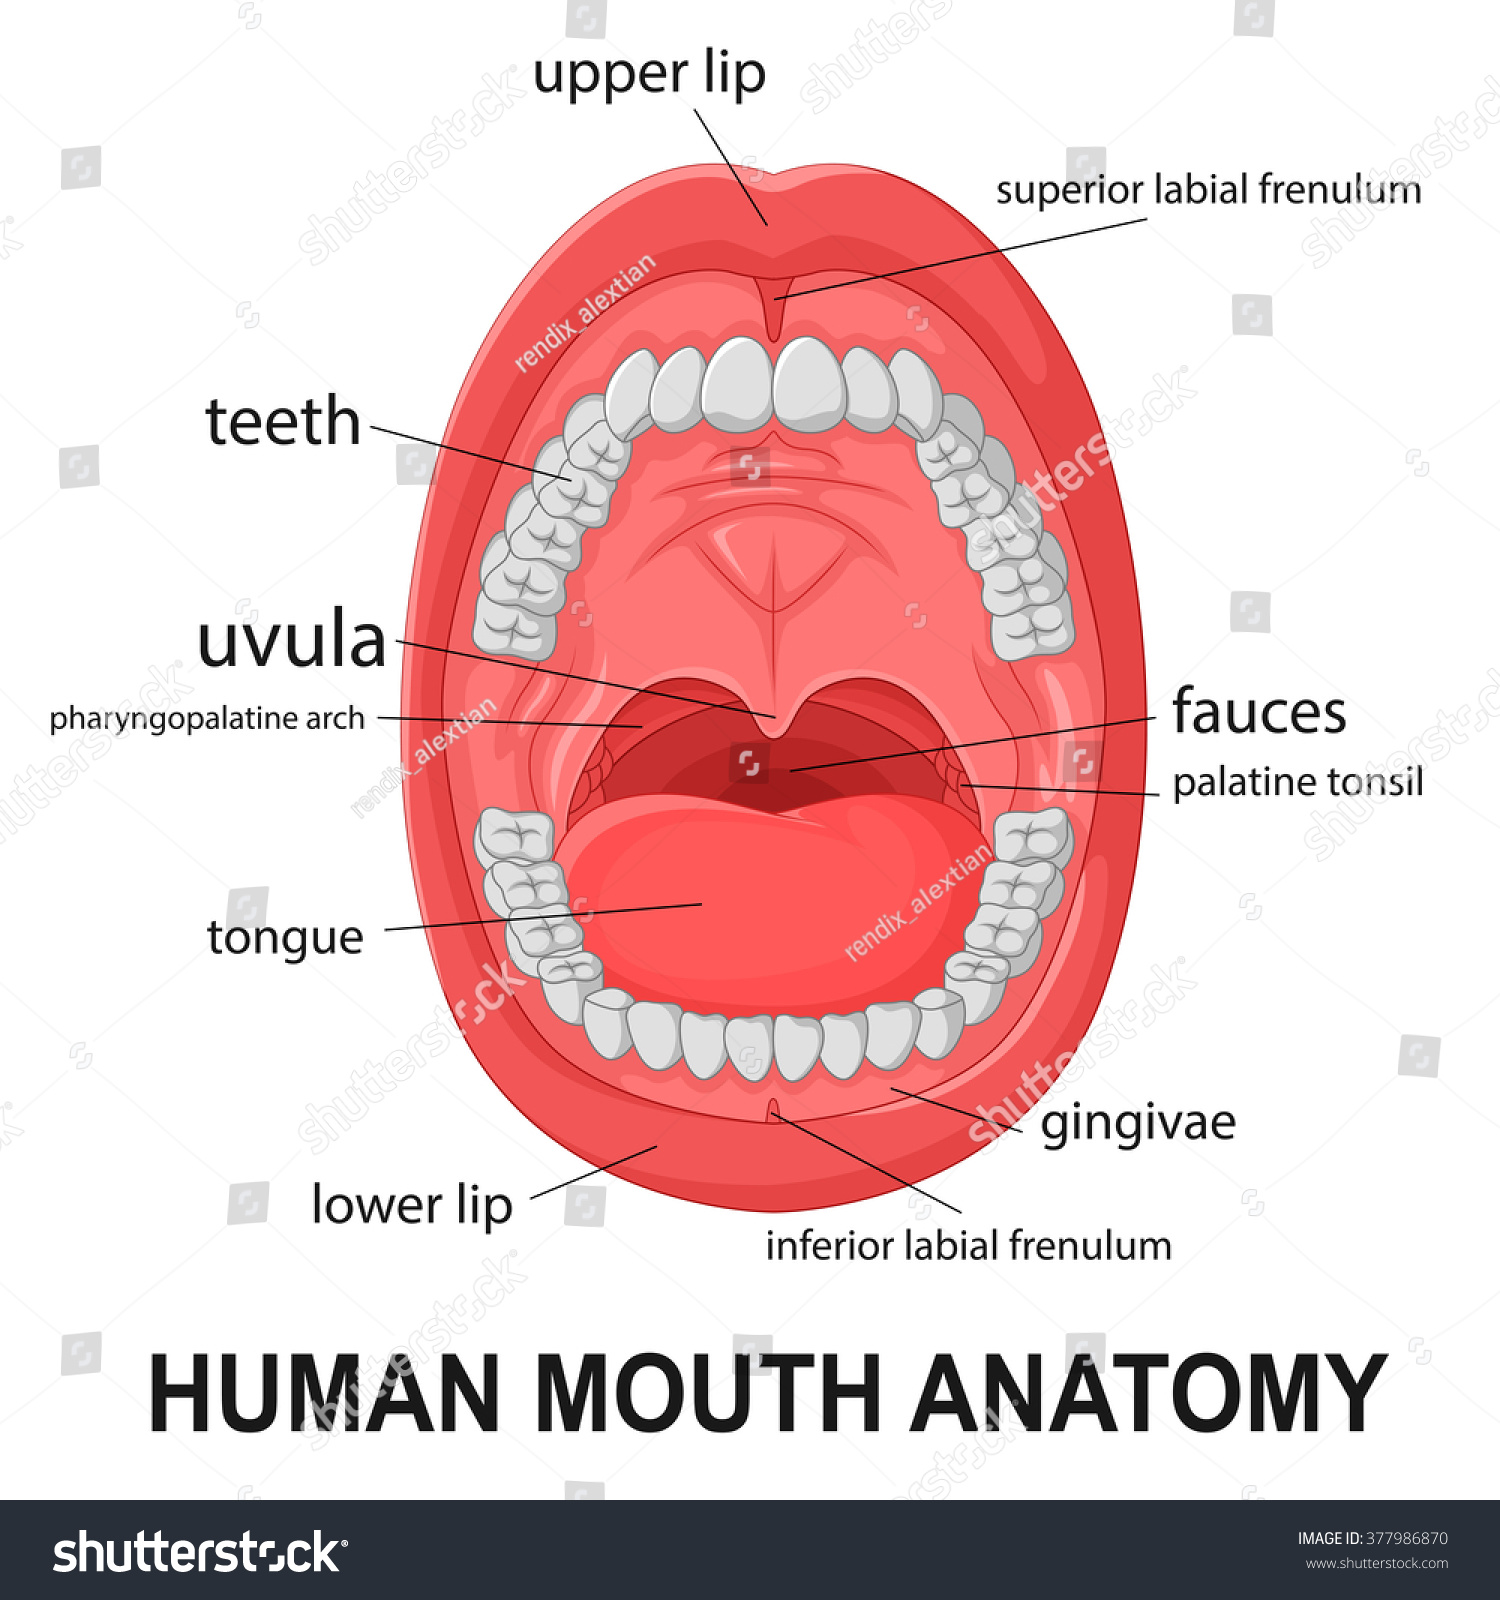 Human Mouth Anatomy Open Mouth Explaining Stock Illustration 377986870